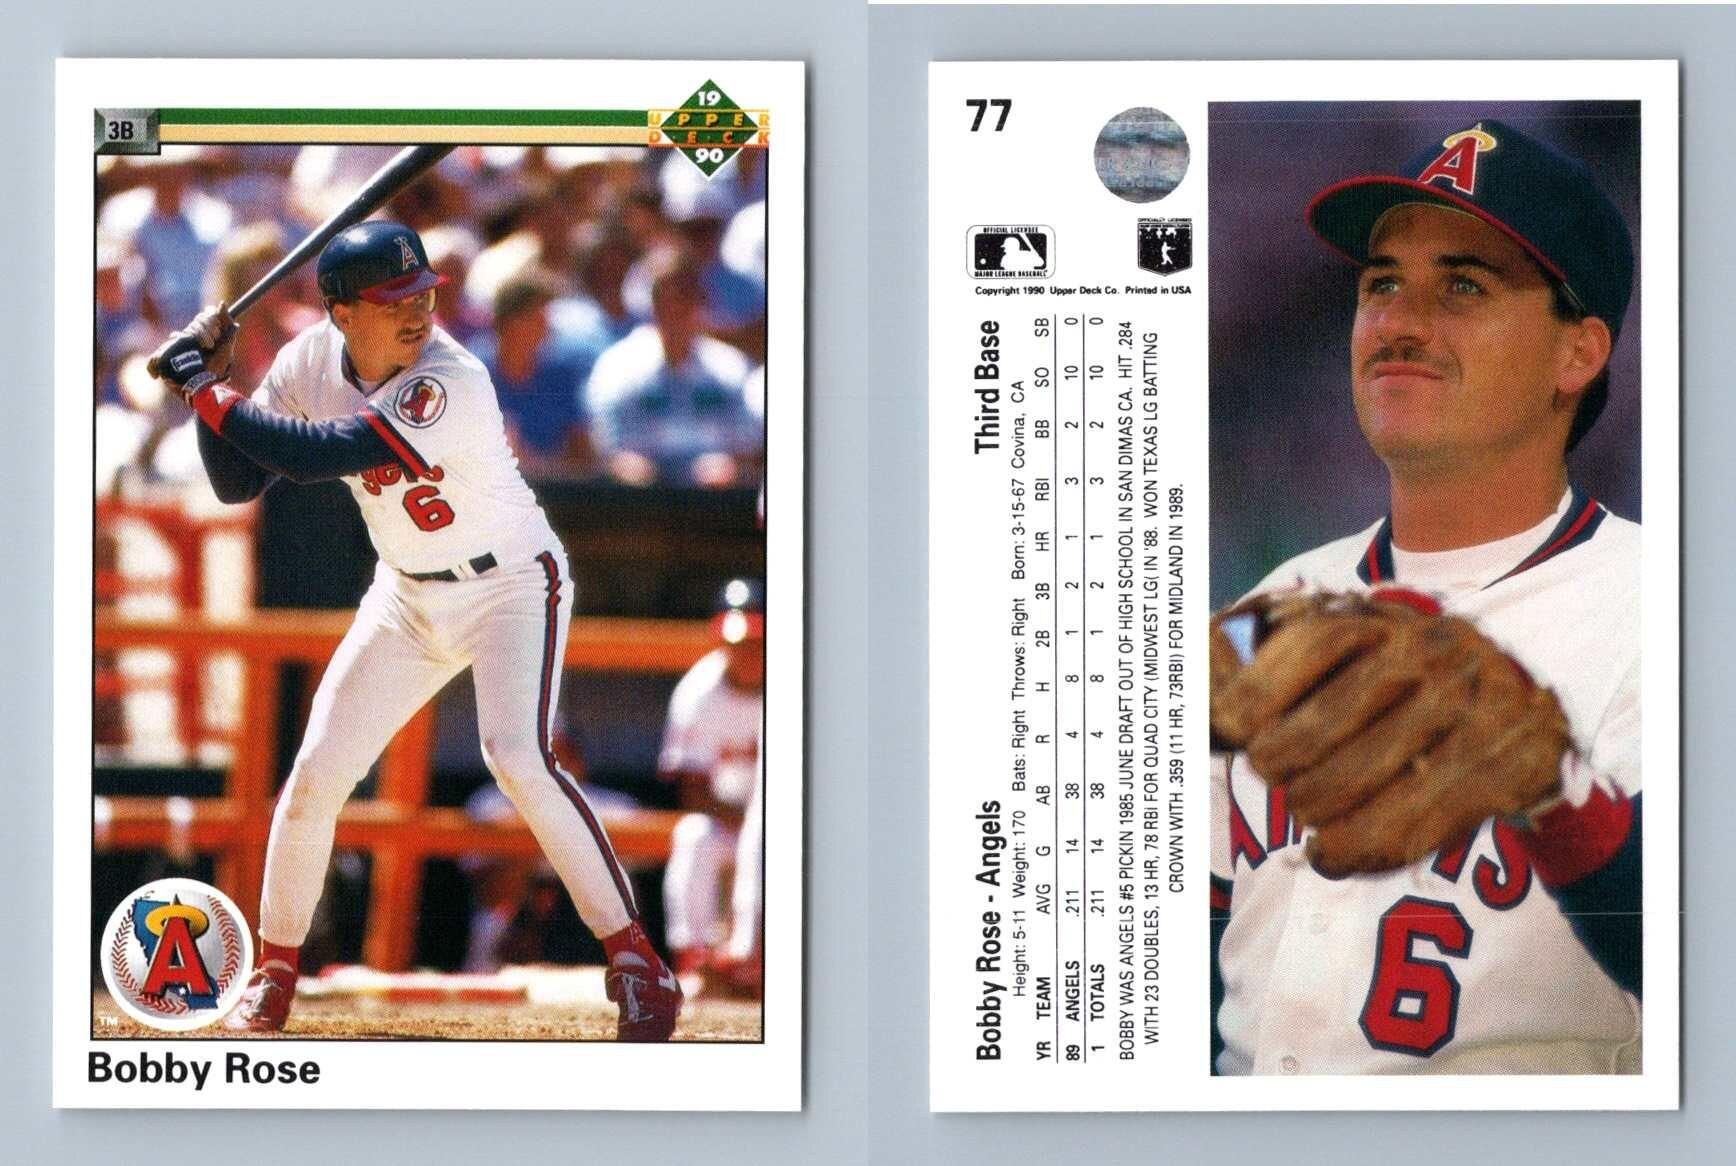  1991 Upper Deck Baseball Card #77 Chris Sabo